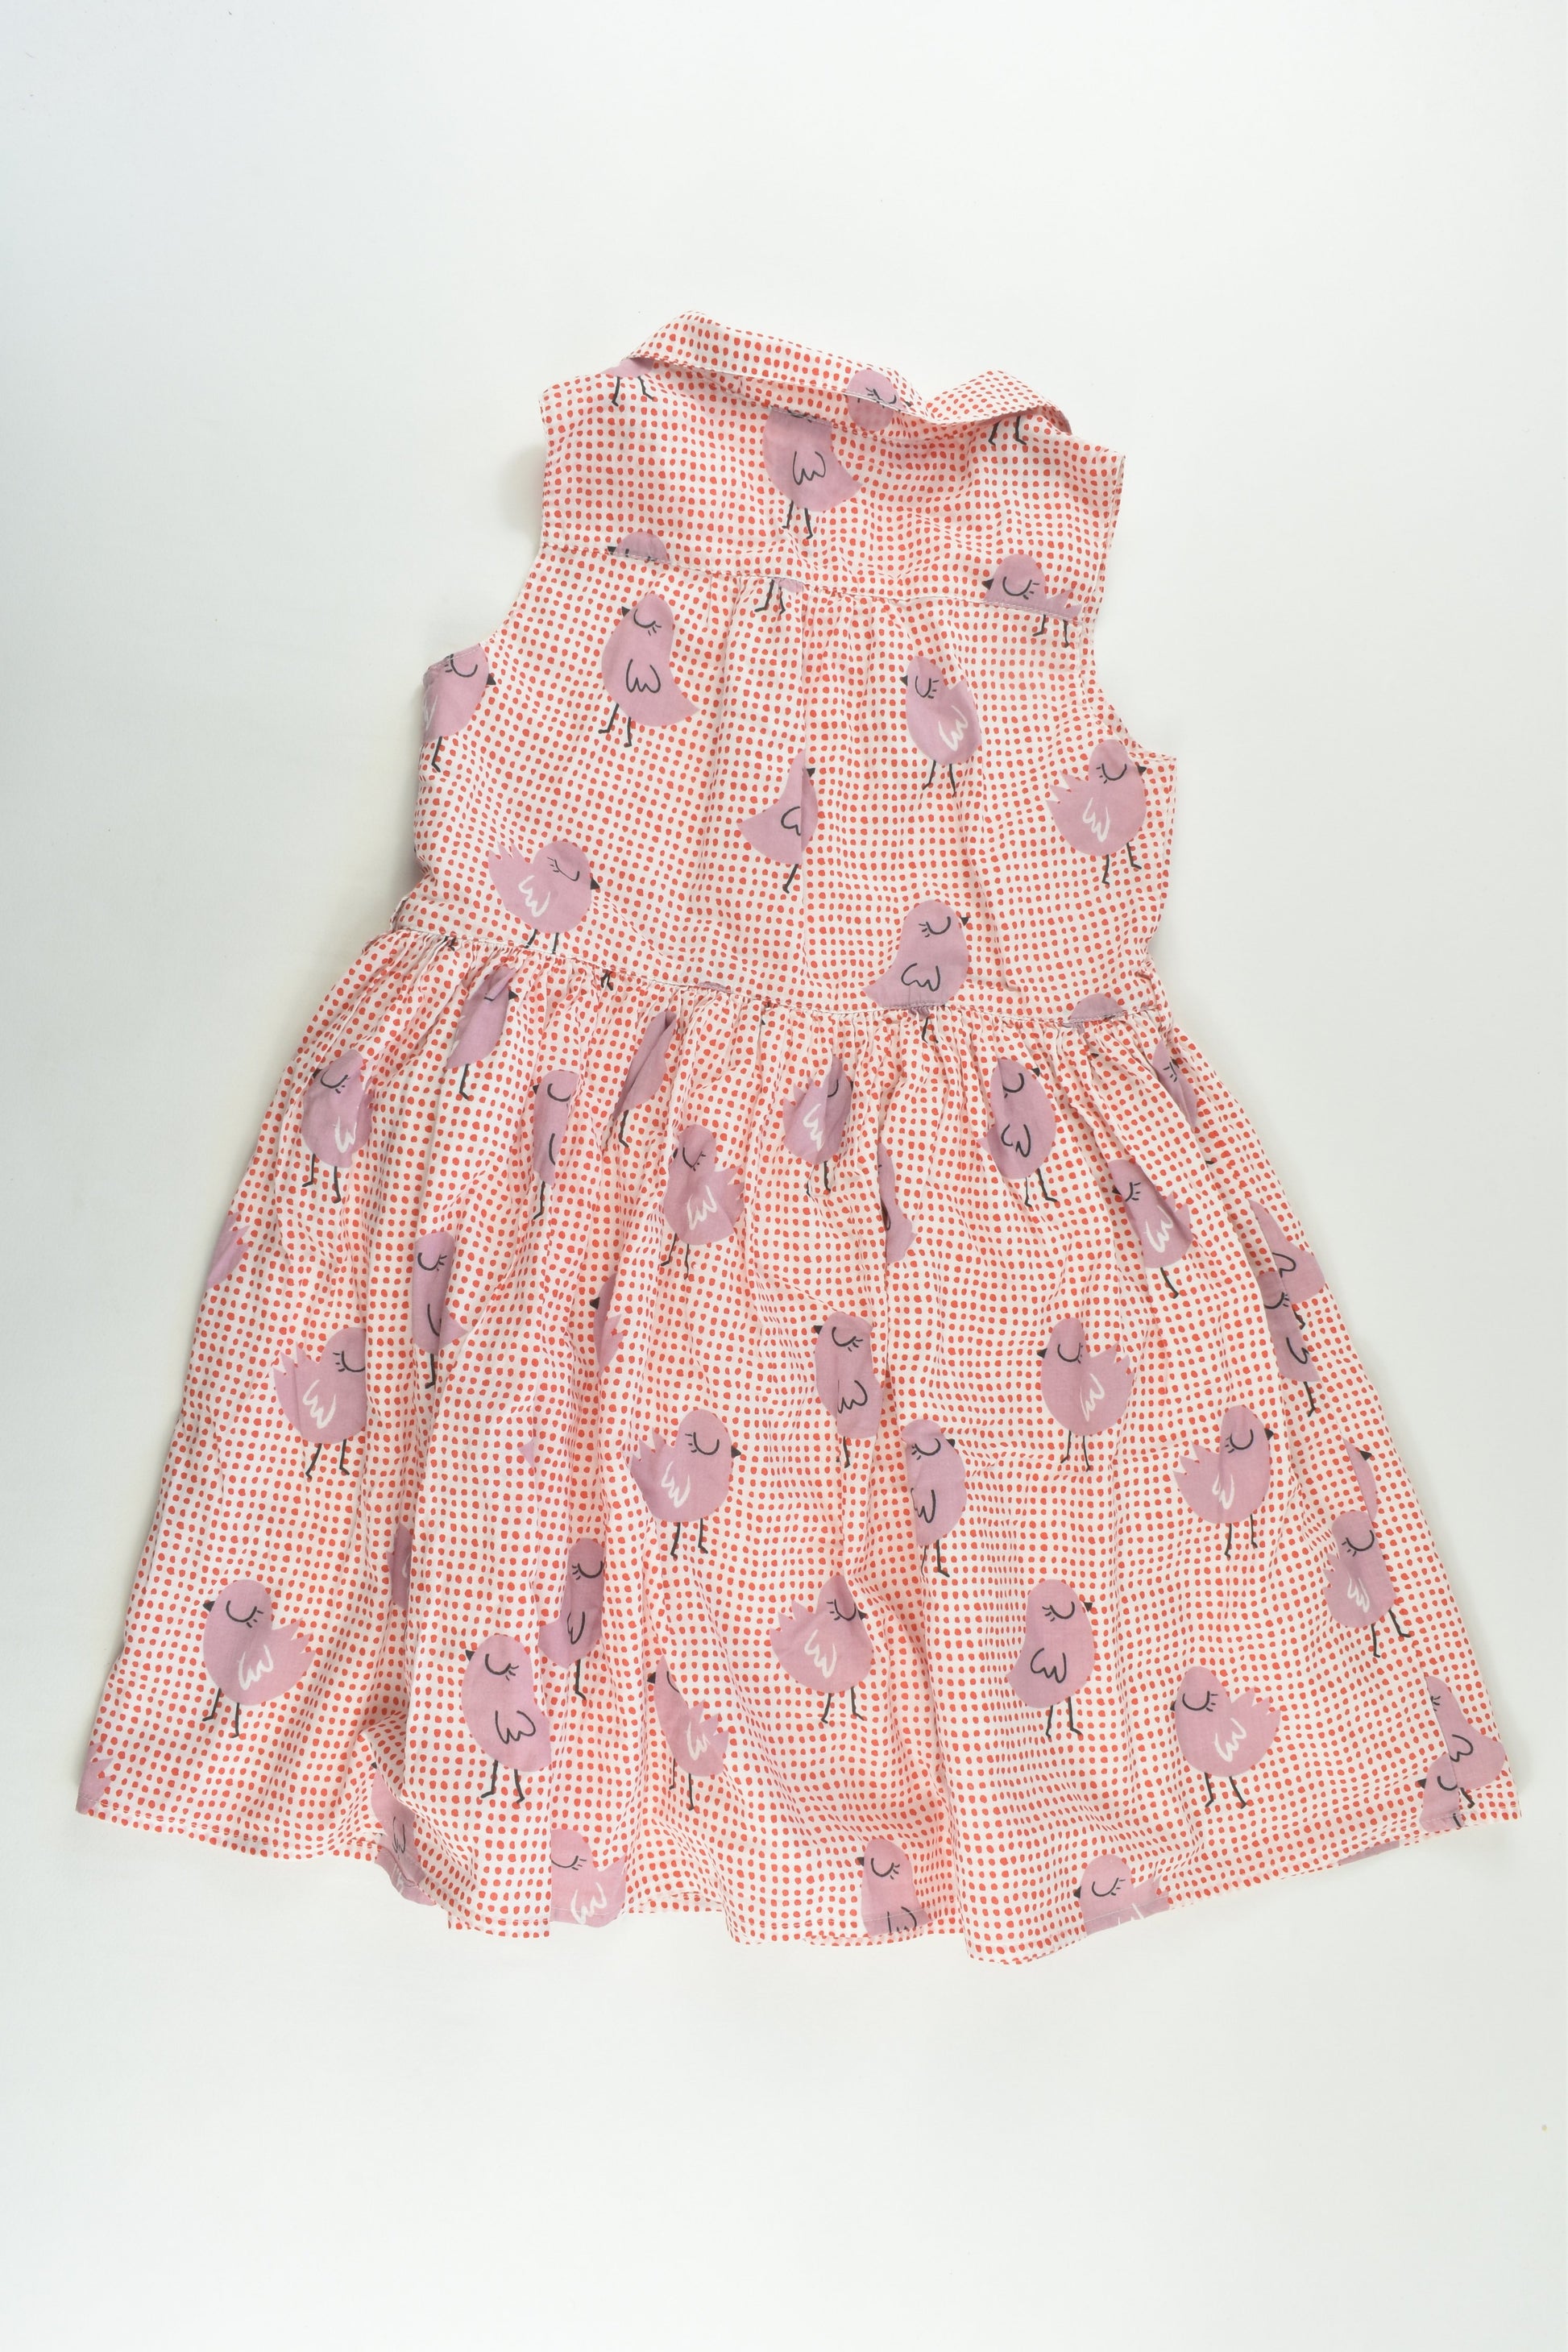 Marks & Spencer Size 4-5 (110 cm) Lined Bird Dress